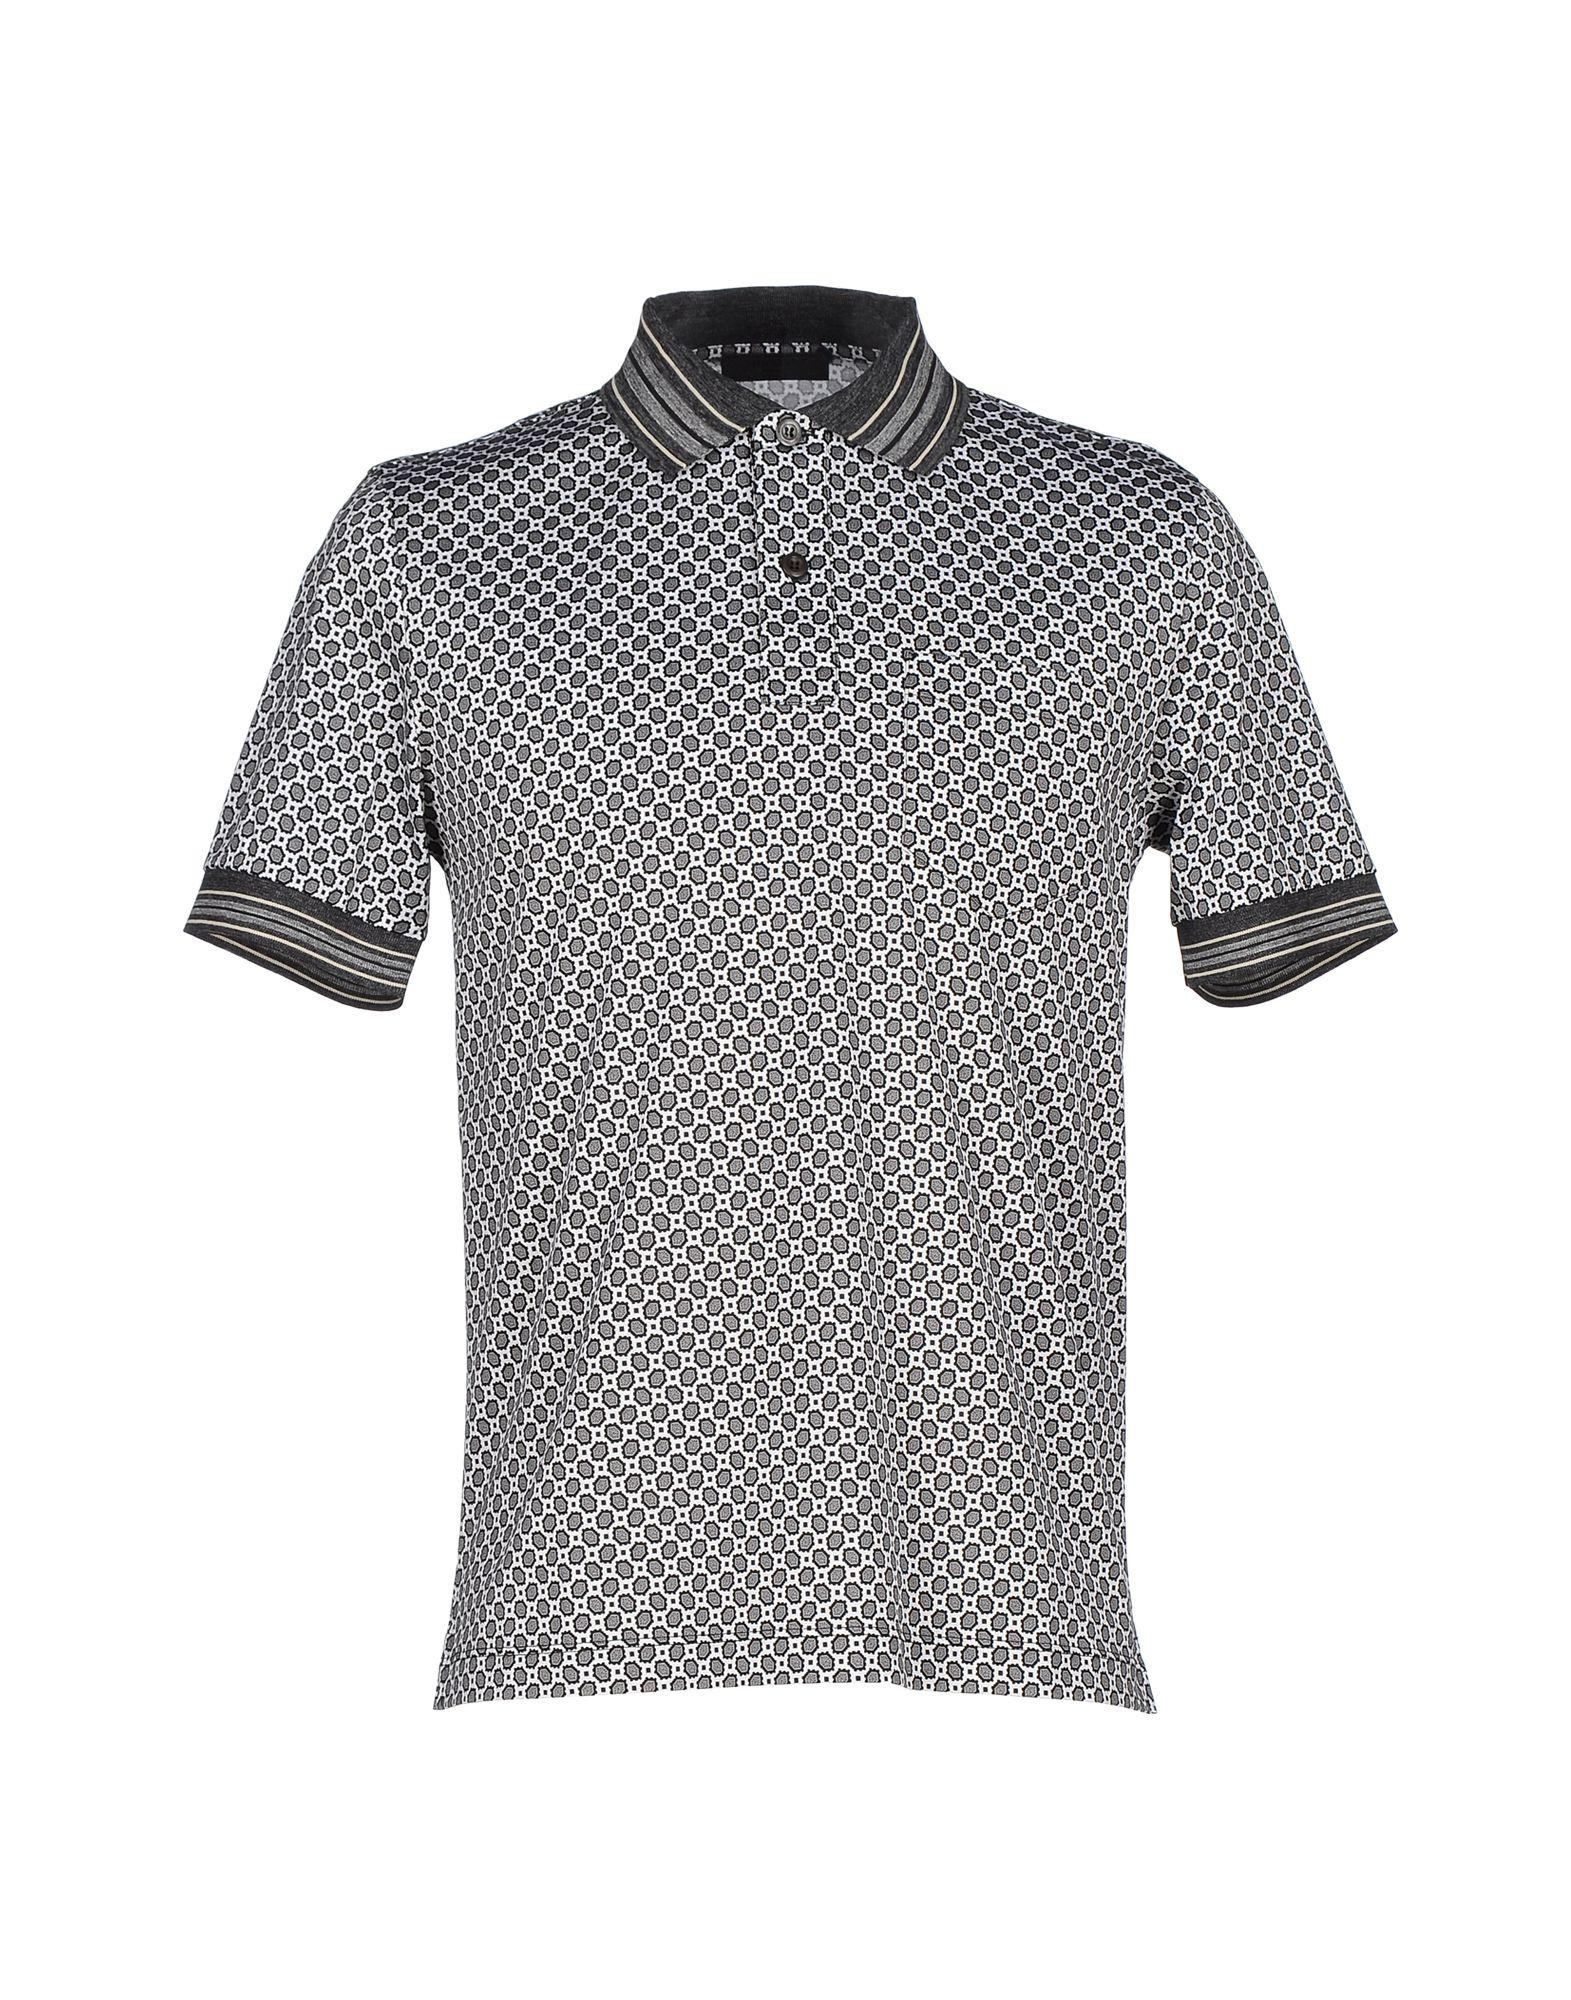 Prada Cotton Polo Shirt in Grey (Gray) for Men - Lyst